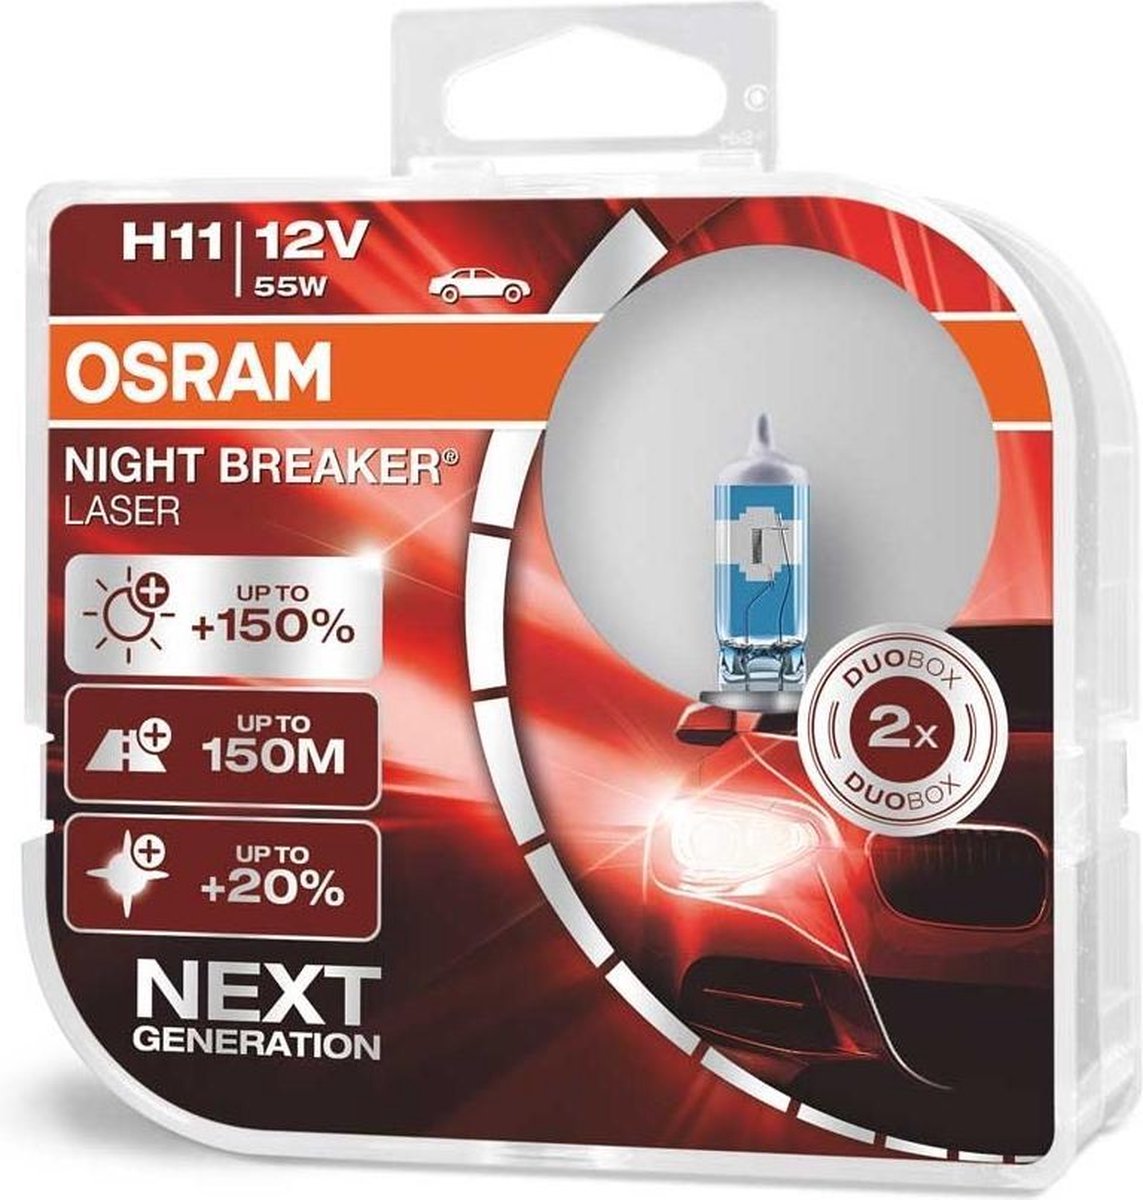 Osram Night Breaker Laser Halogeen lampen - H11 - 12V/55W - set à 2 stuks